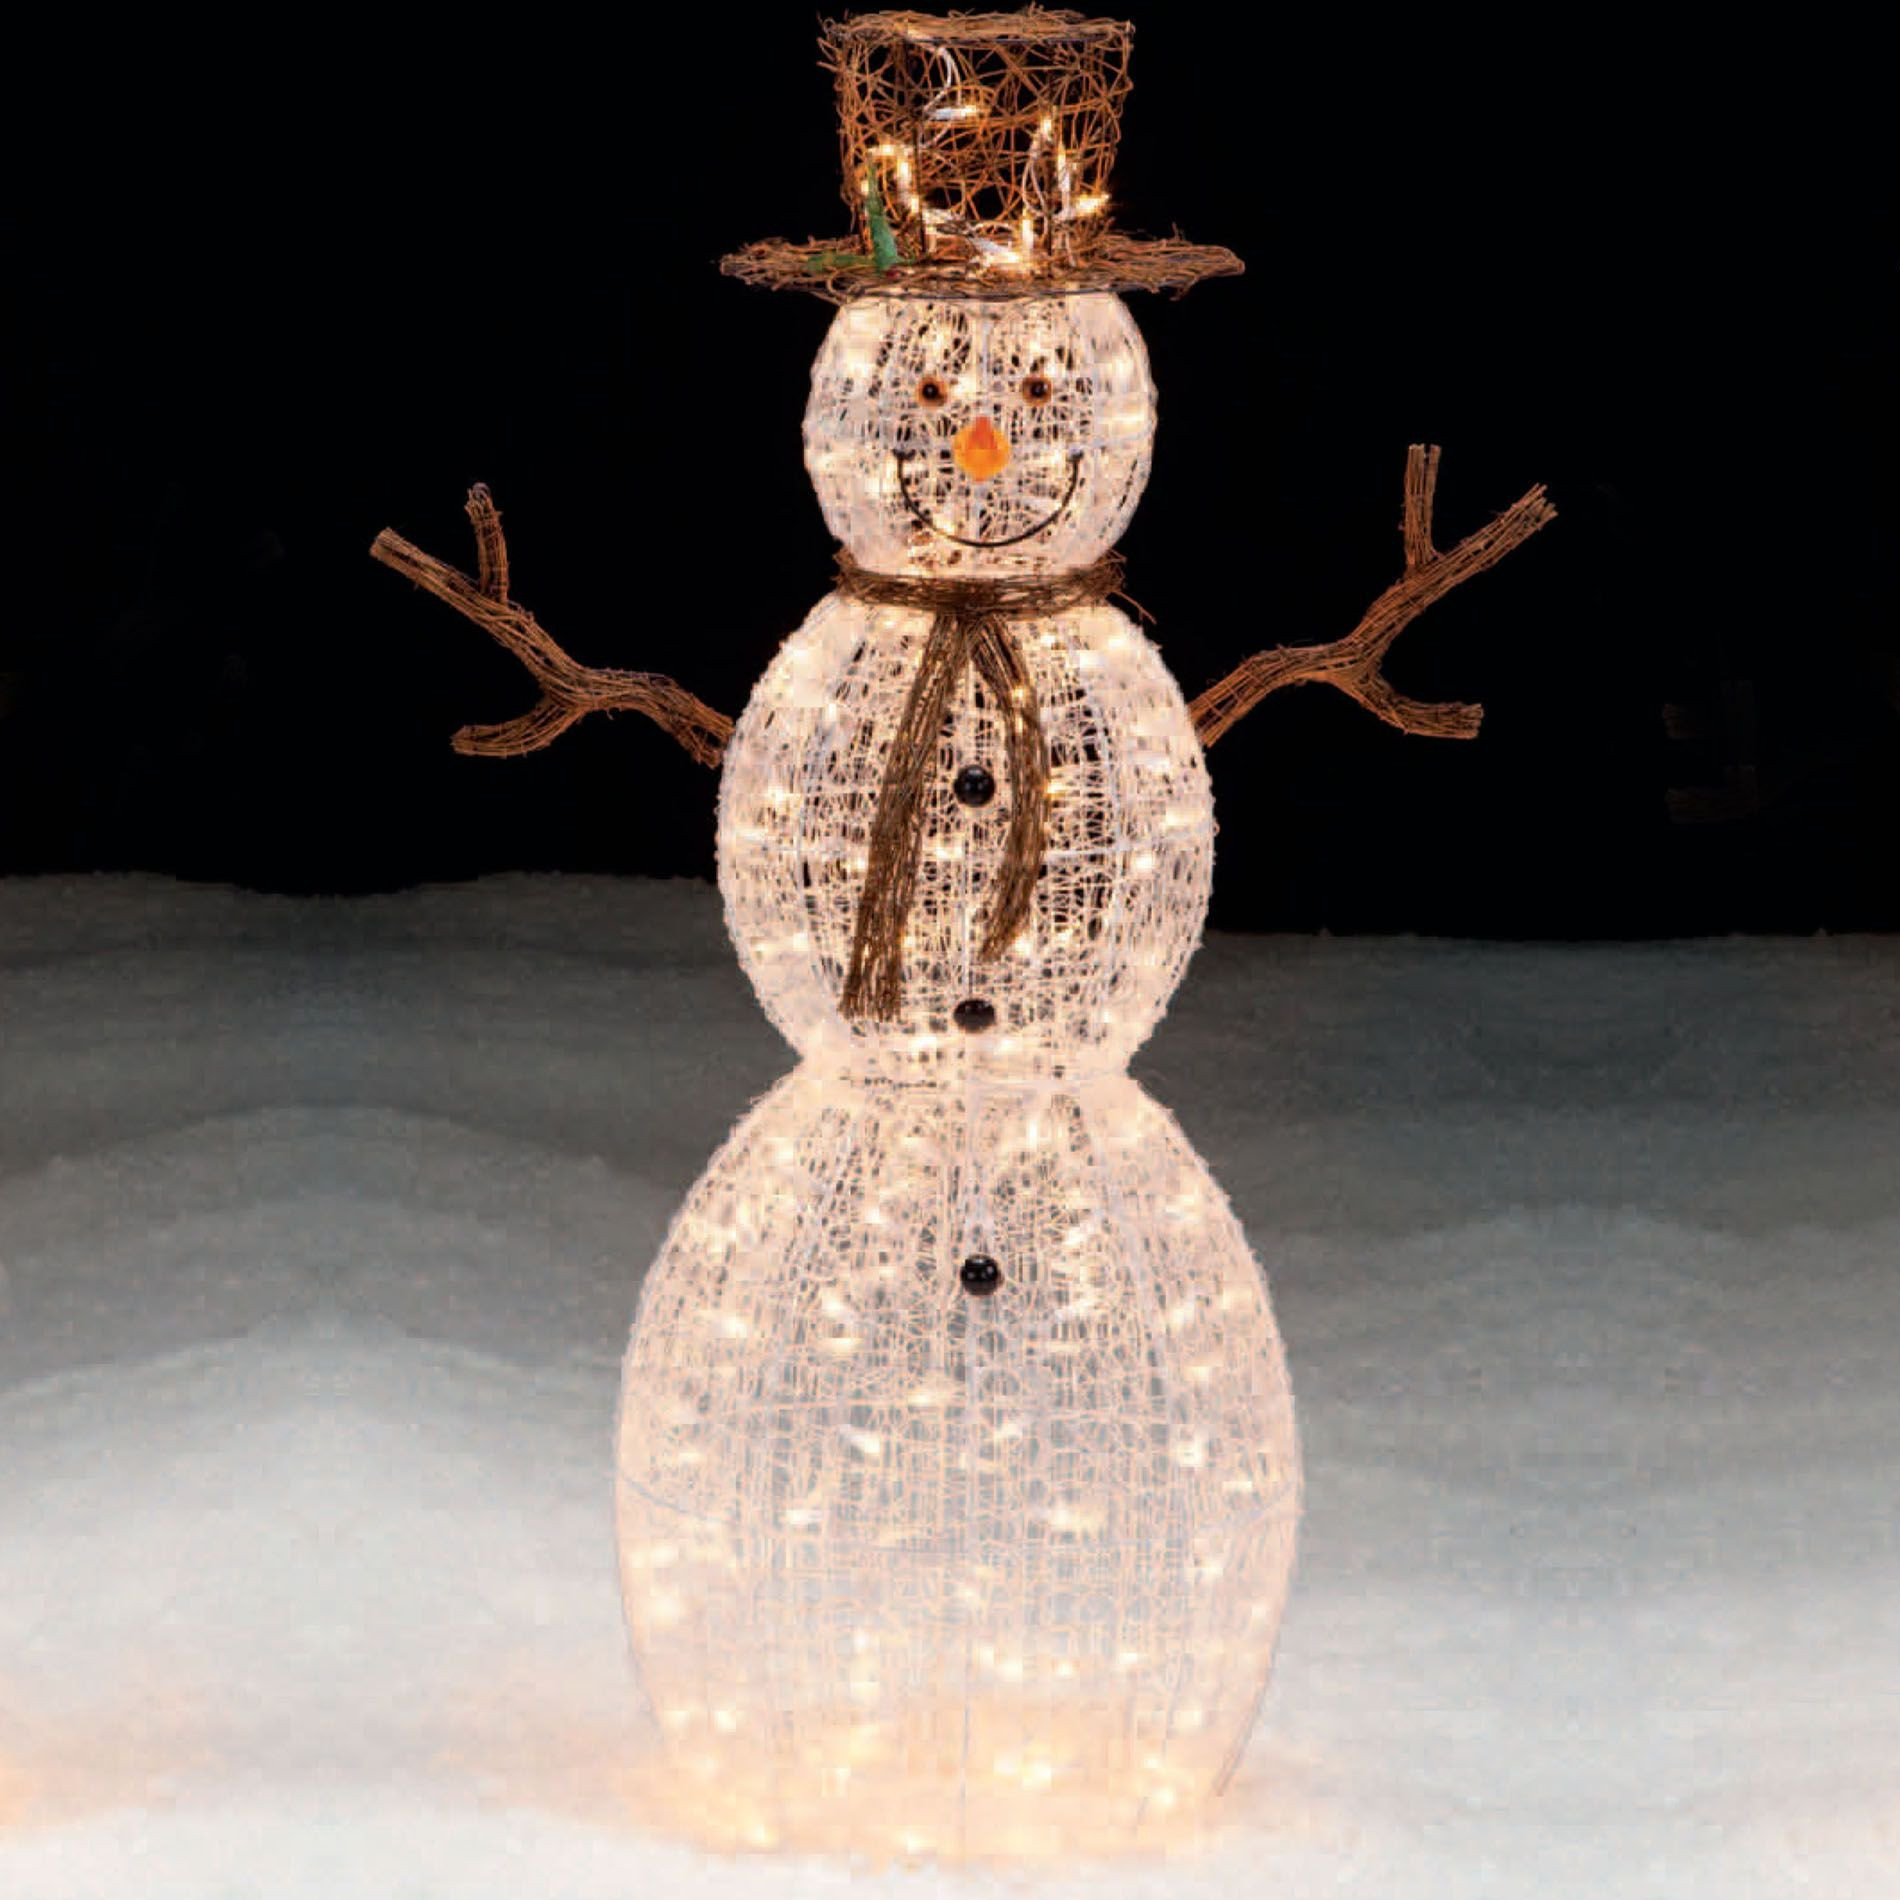 Light Up Outdoor Christmas Decorations
 Trim A Home 50” Lighted Snowman Outdoor Christmas